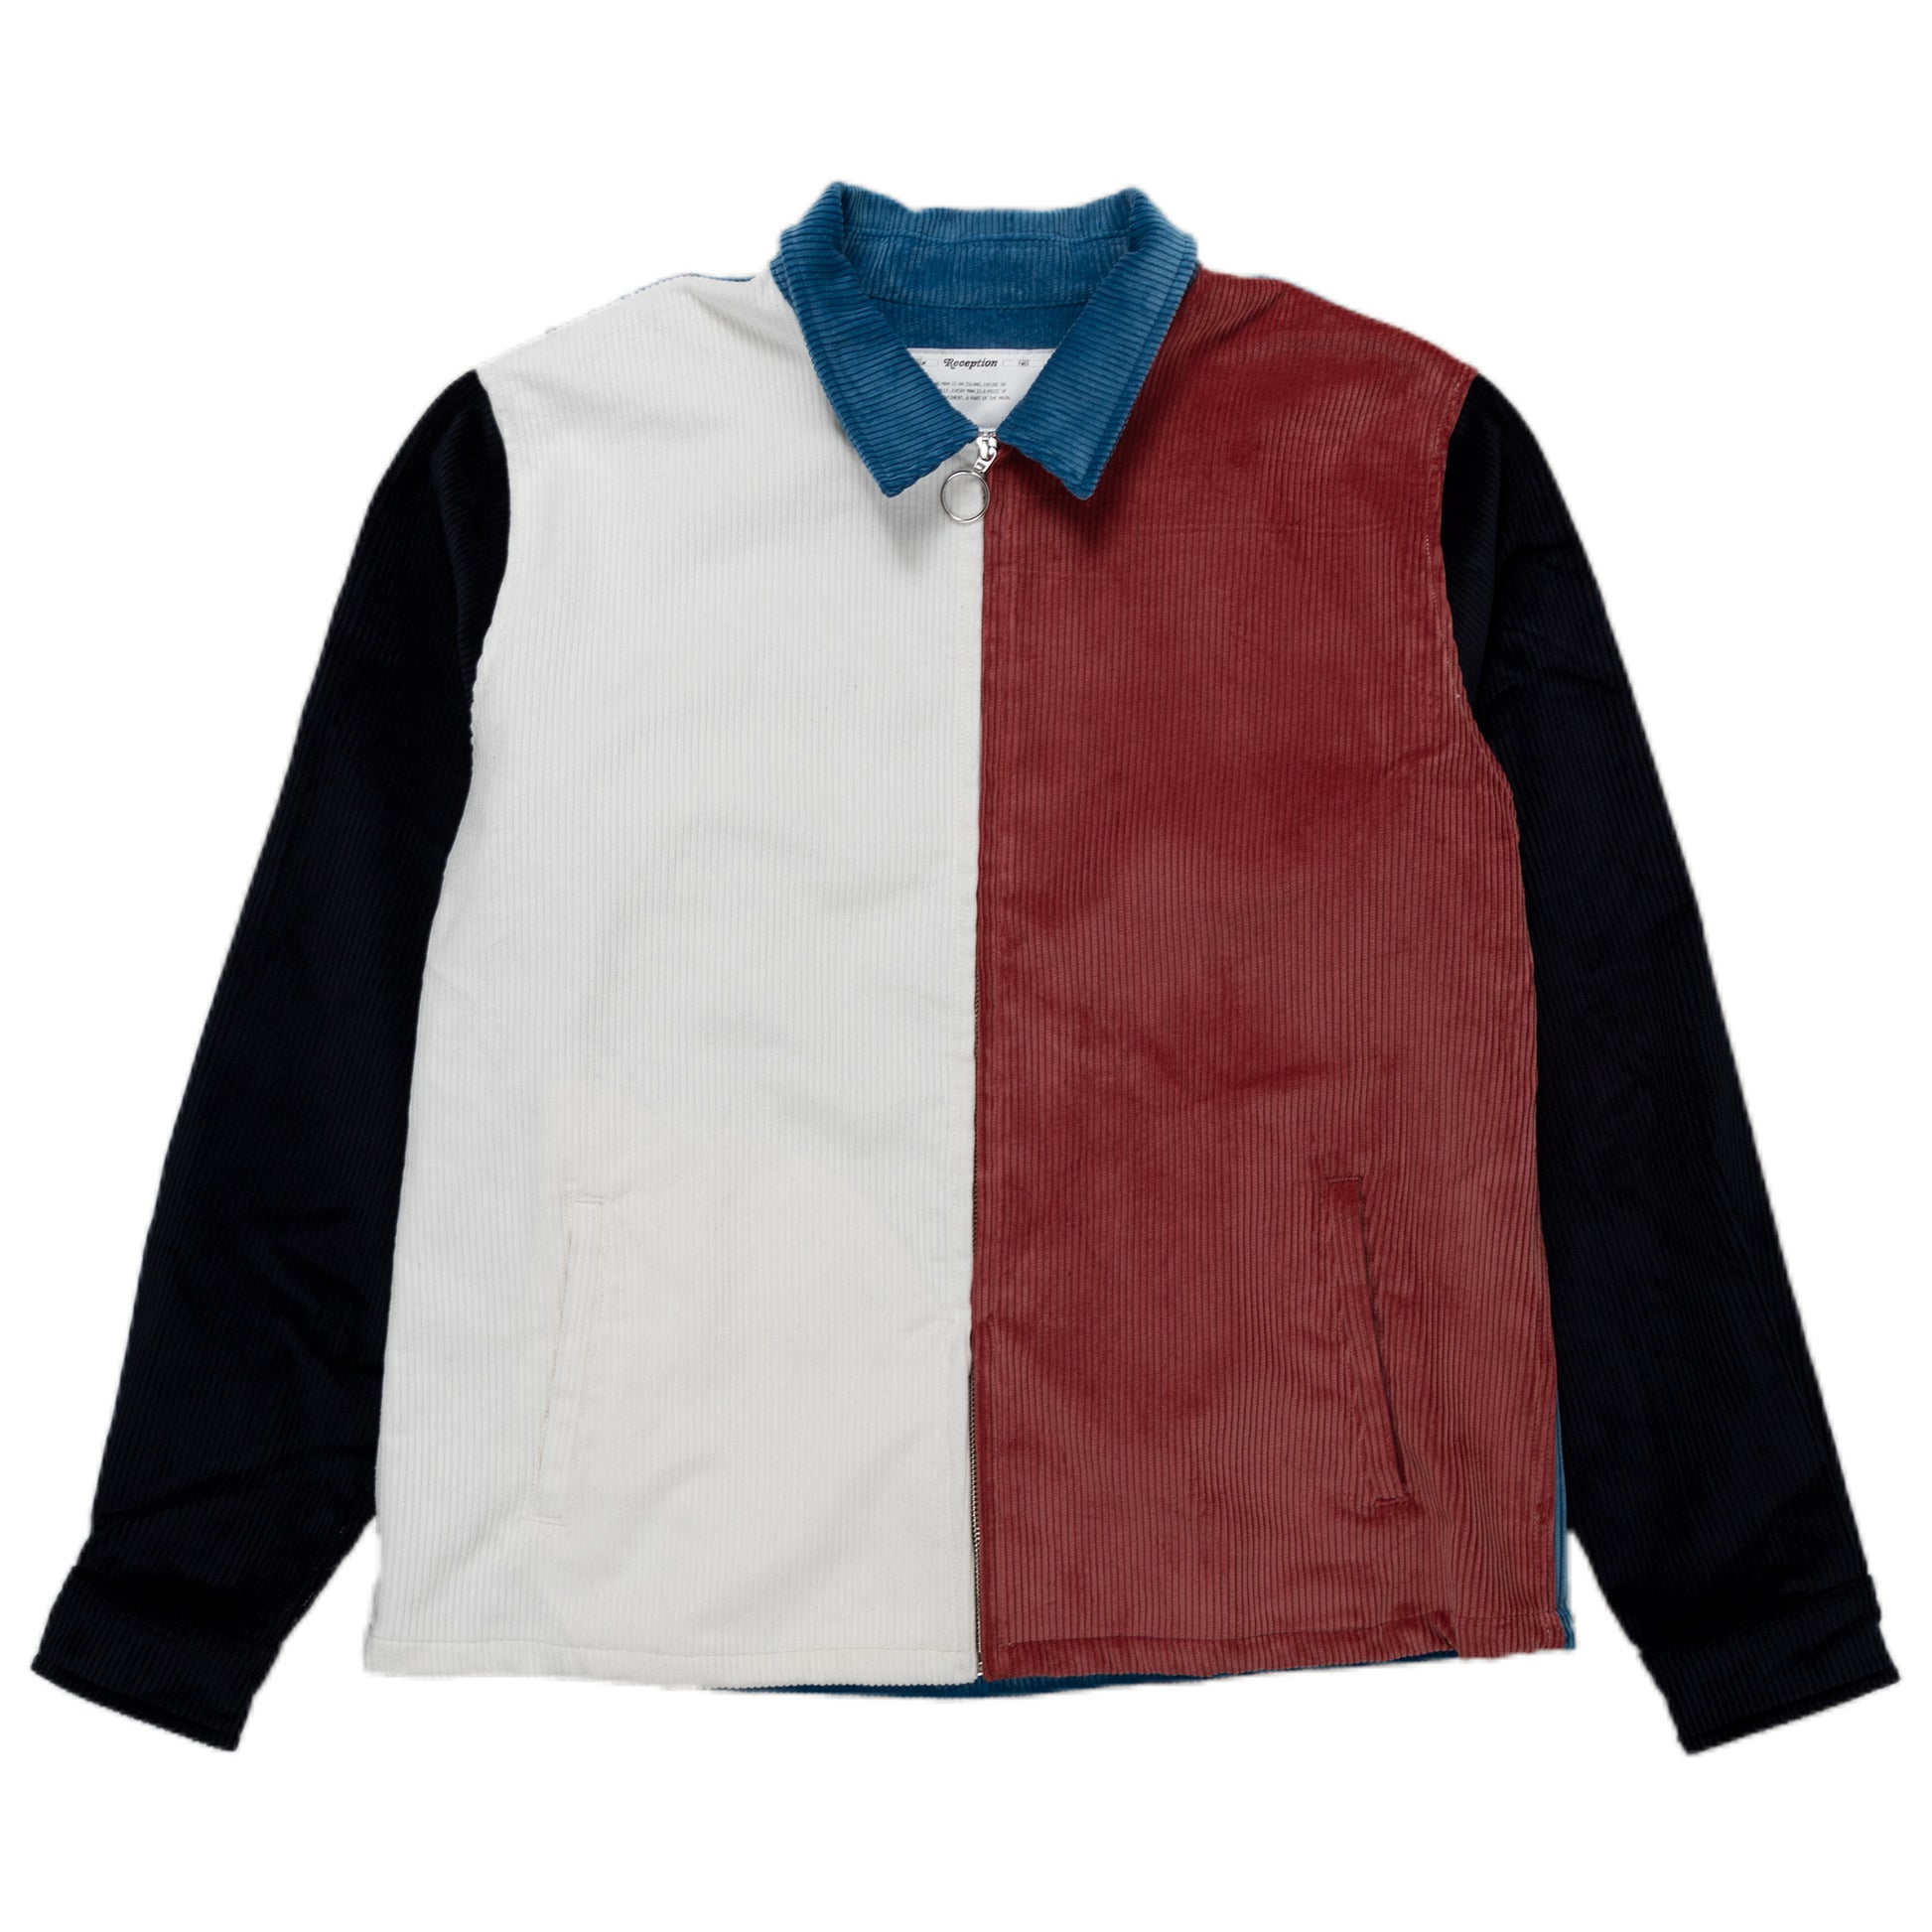 Reception SC Club Jacket Multi Color Outerwear Corduroy Front